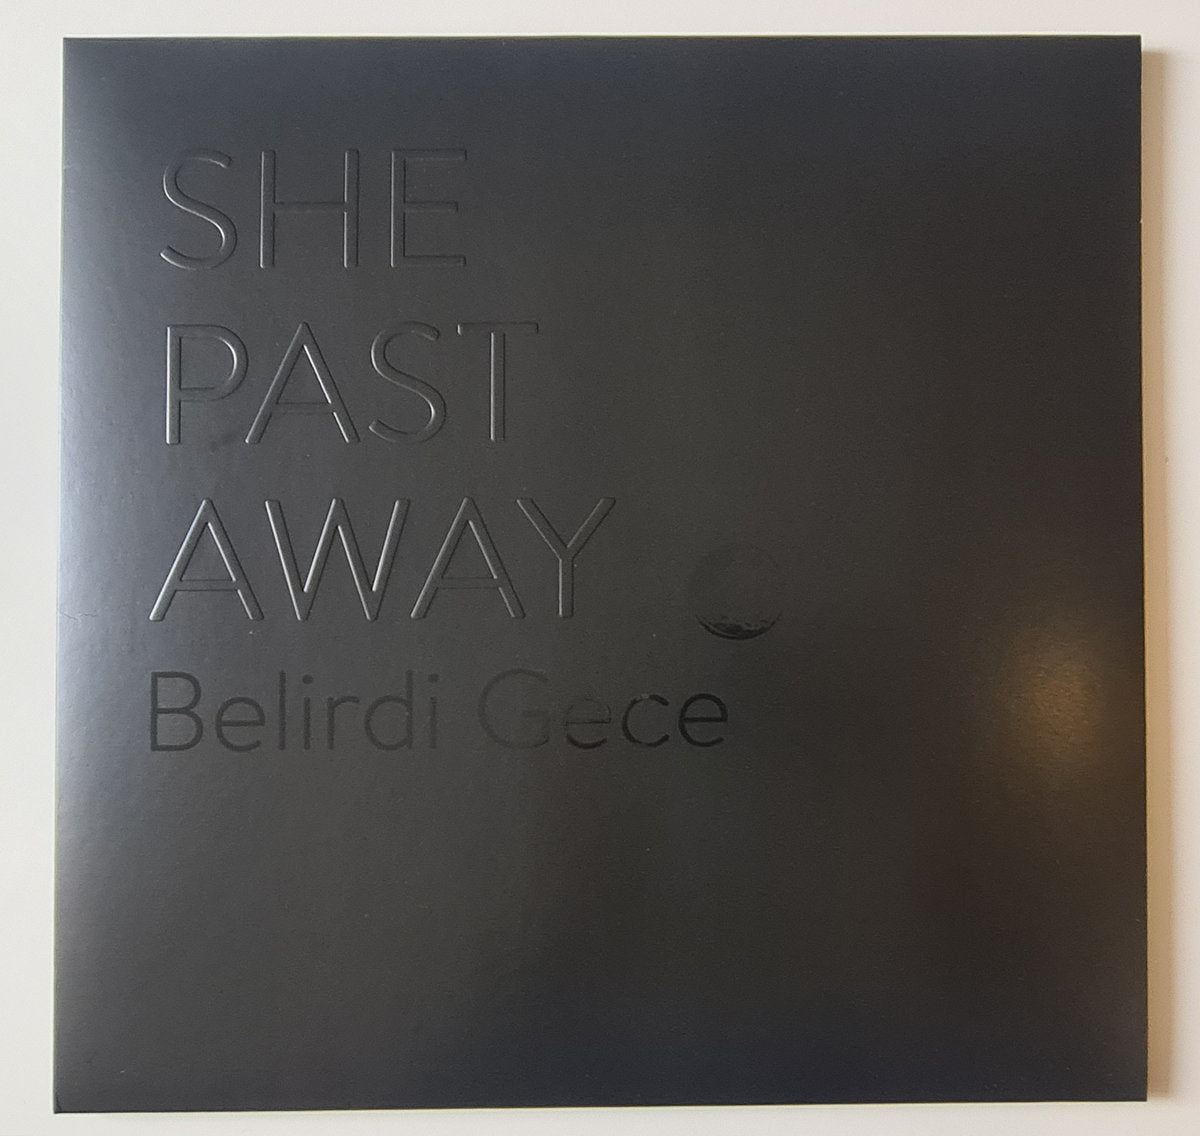 She Past Away - Belirdi Gece - LP